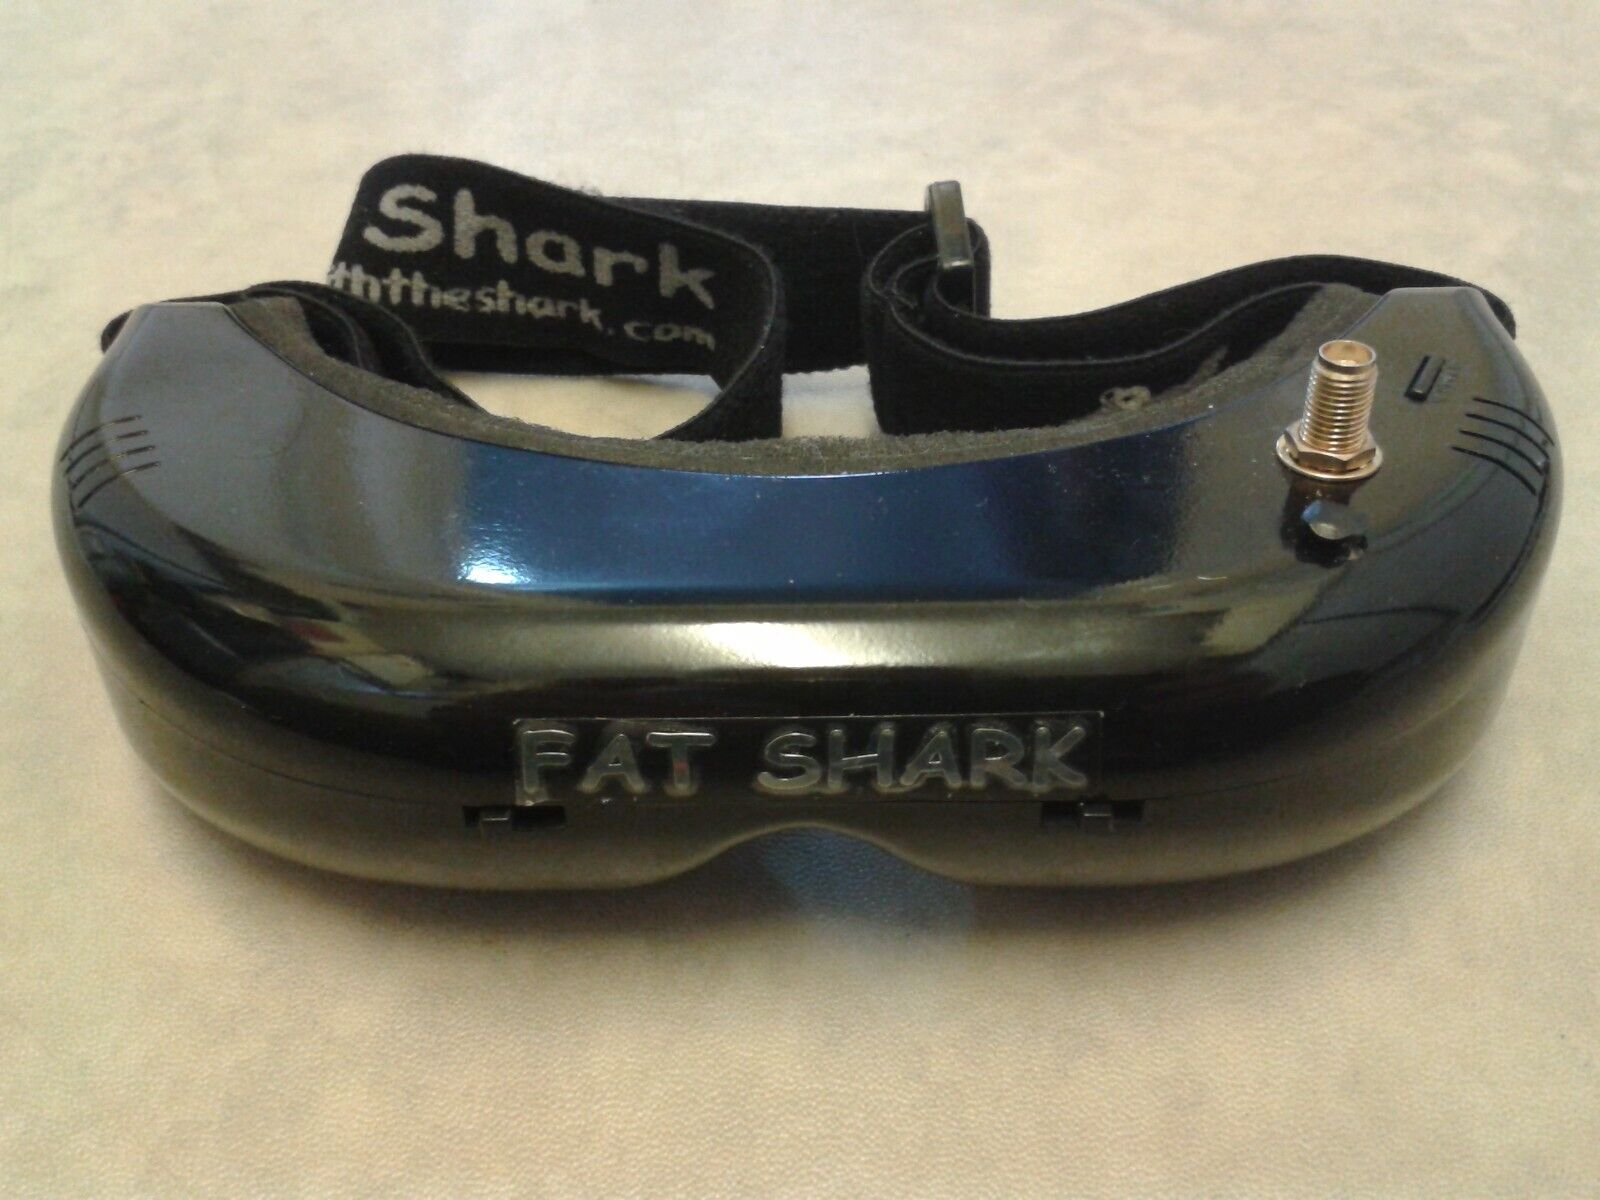 Fatshark Aviator FPV Goggles & Camera Kit